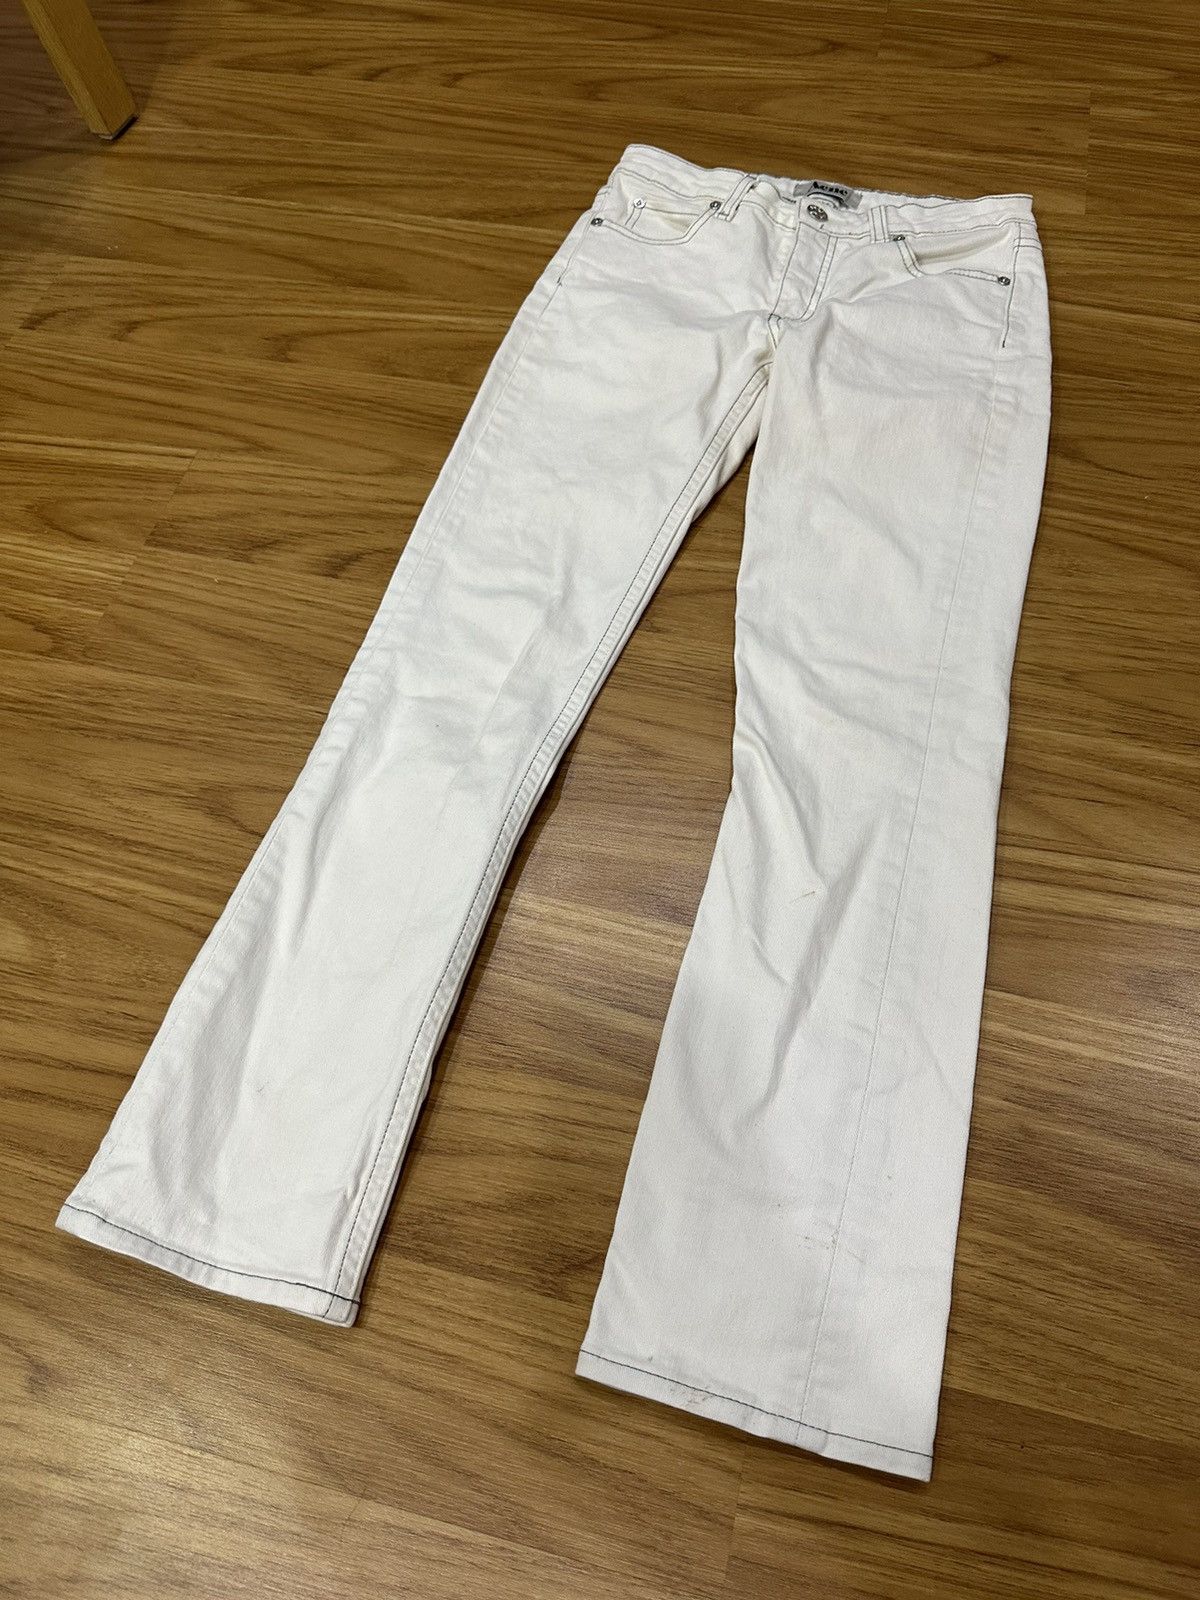 SS15 Acne Studios White Skinny Jeans - 3